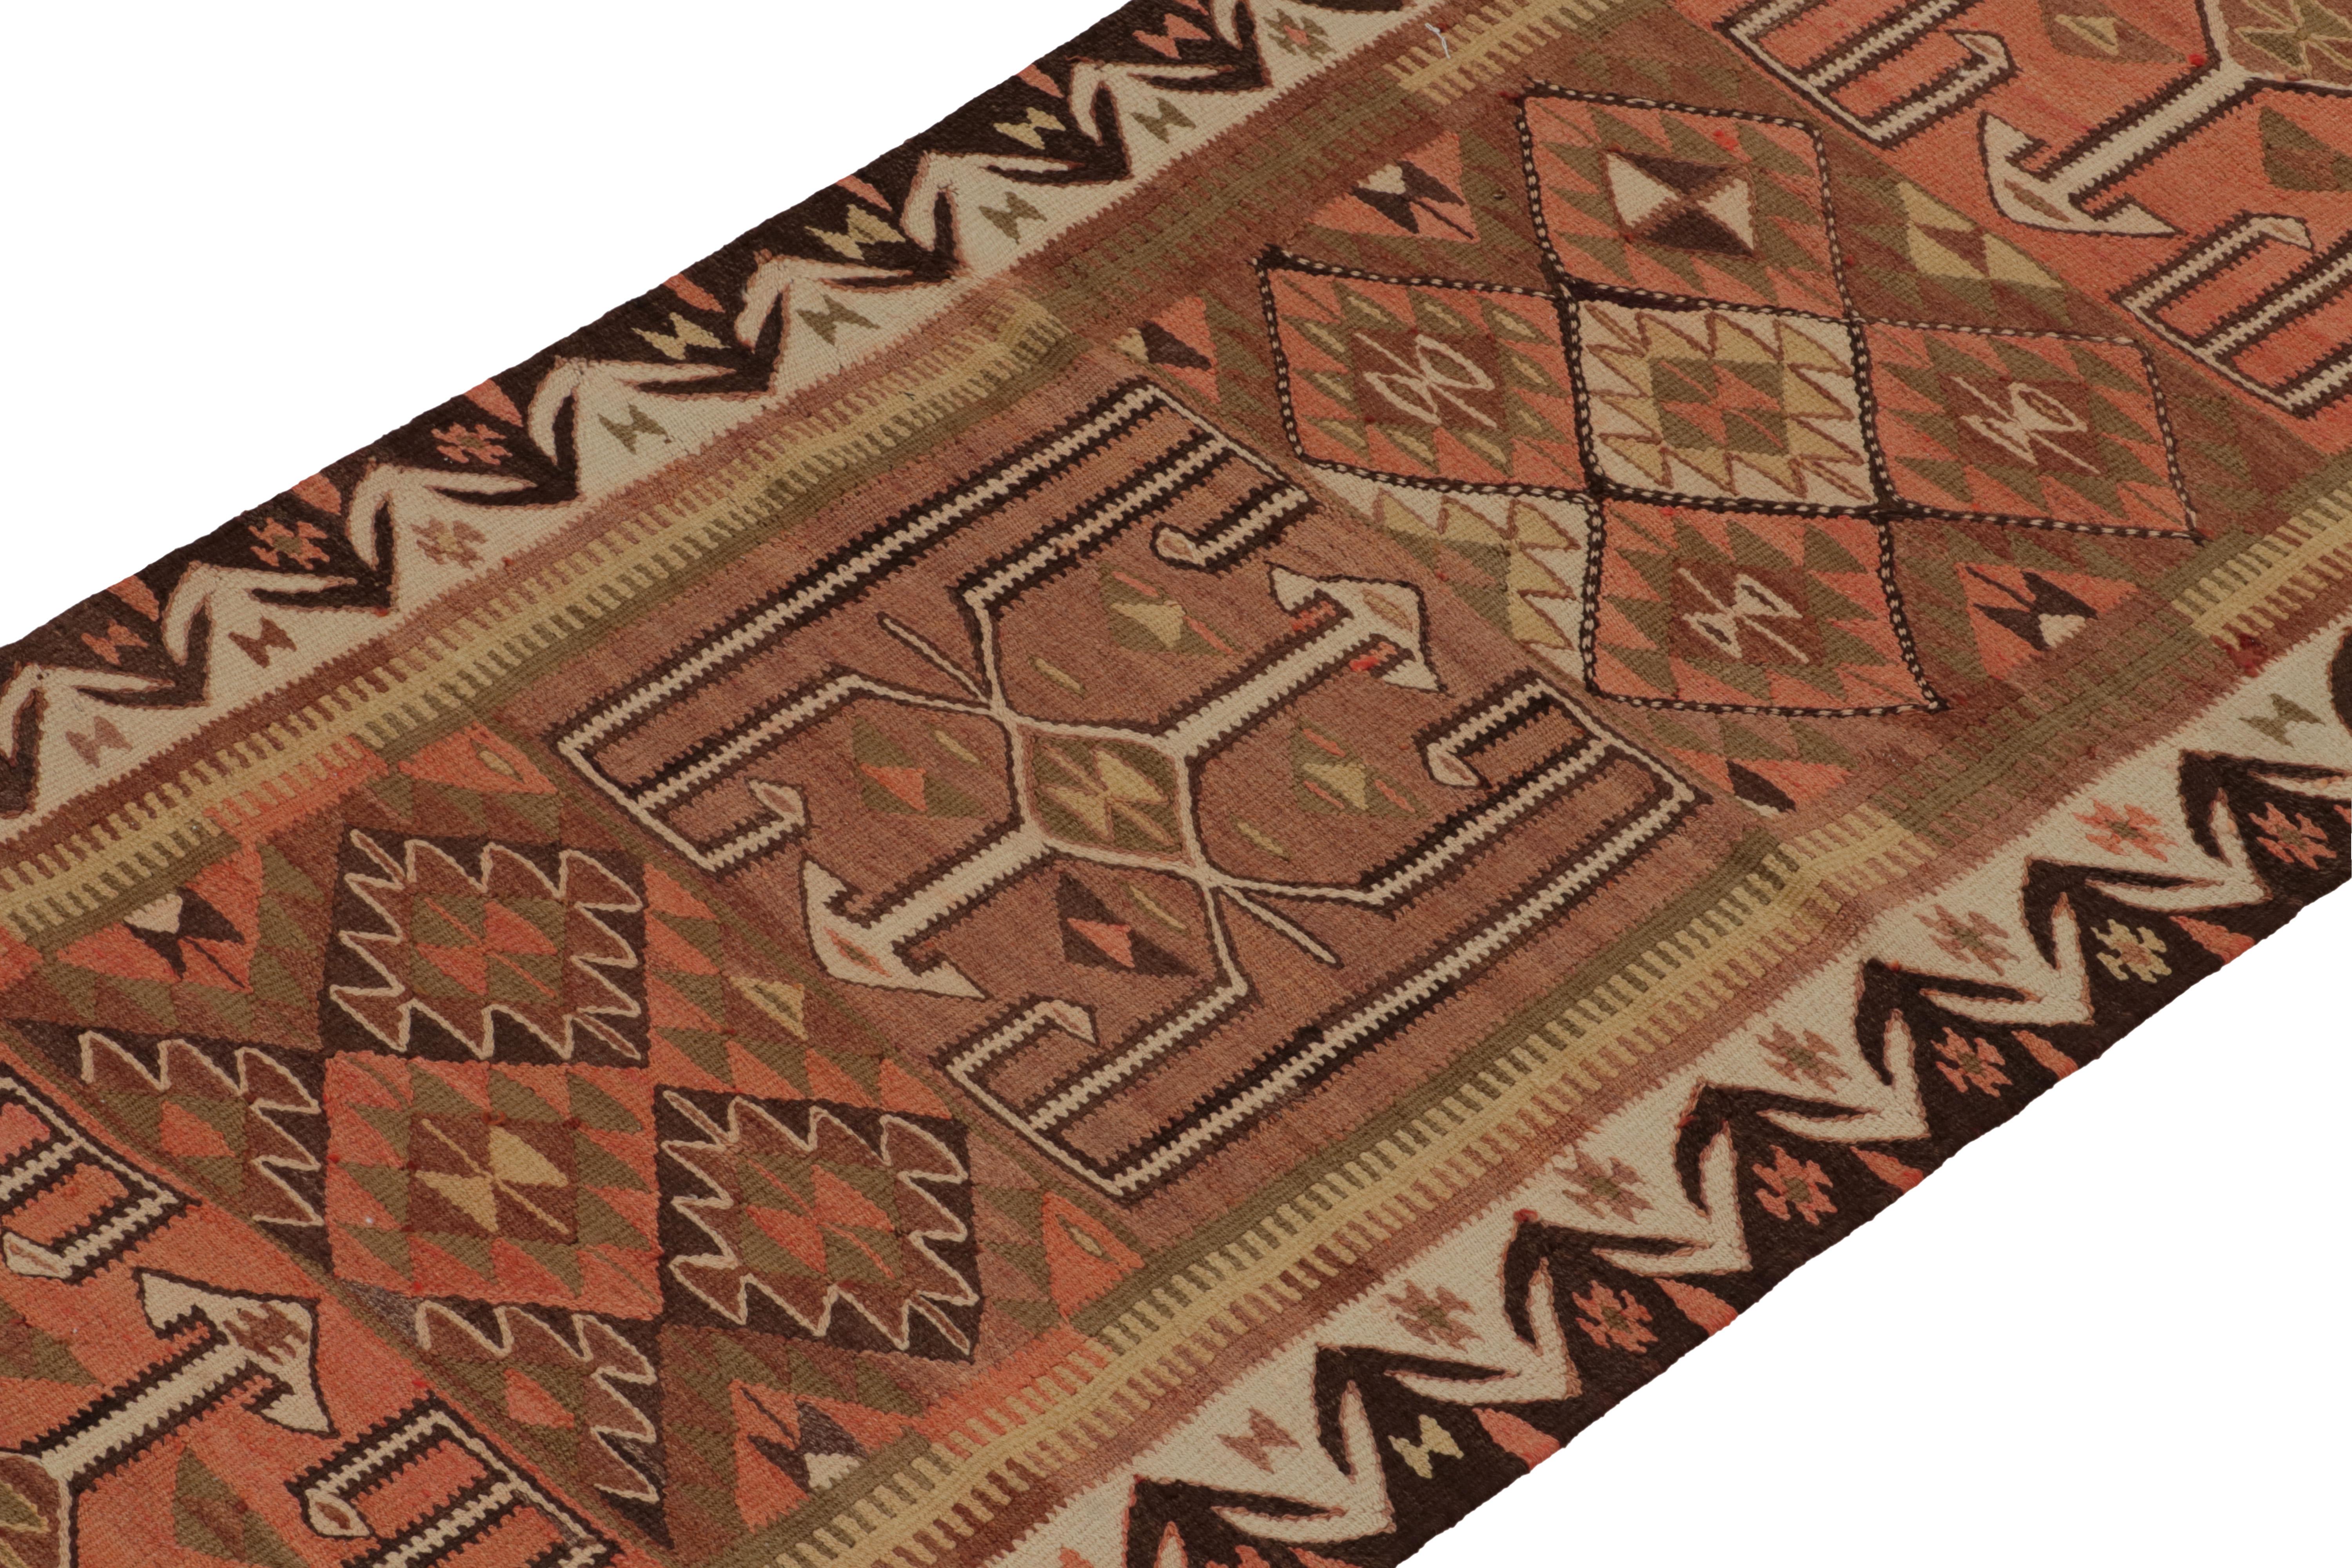 Hand-Knotted Vintage Tribal Kilim Runner in Beige-Brown Geometric Pattern by Rug & Kilim For Sale